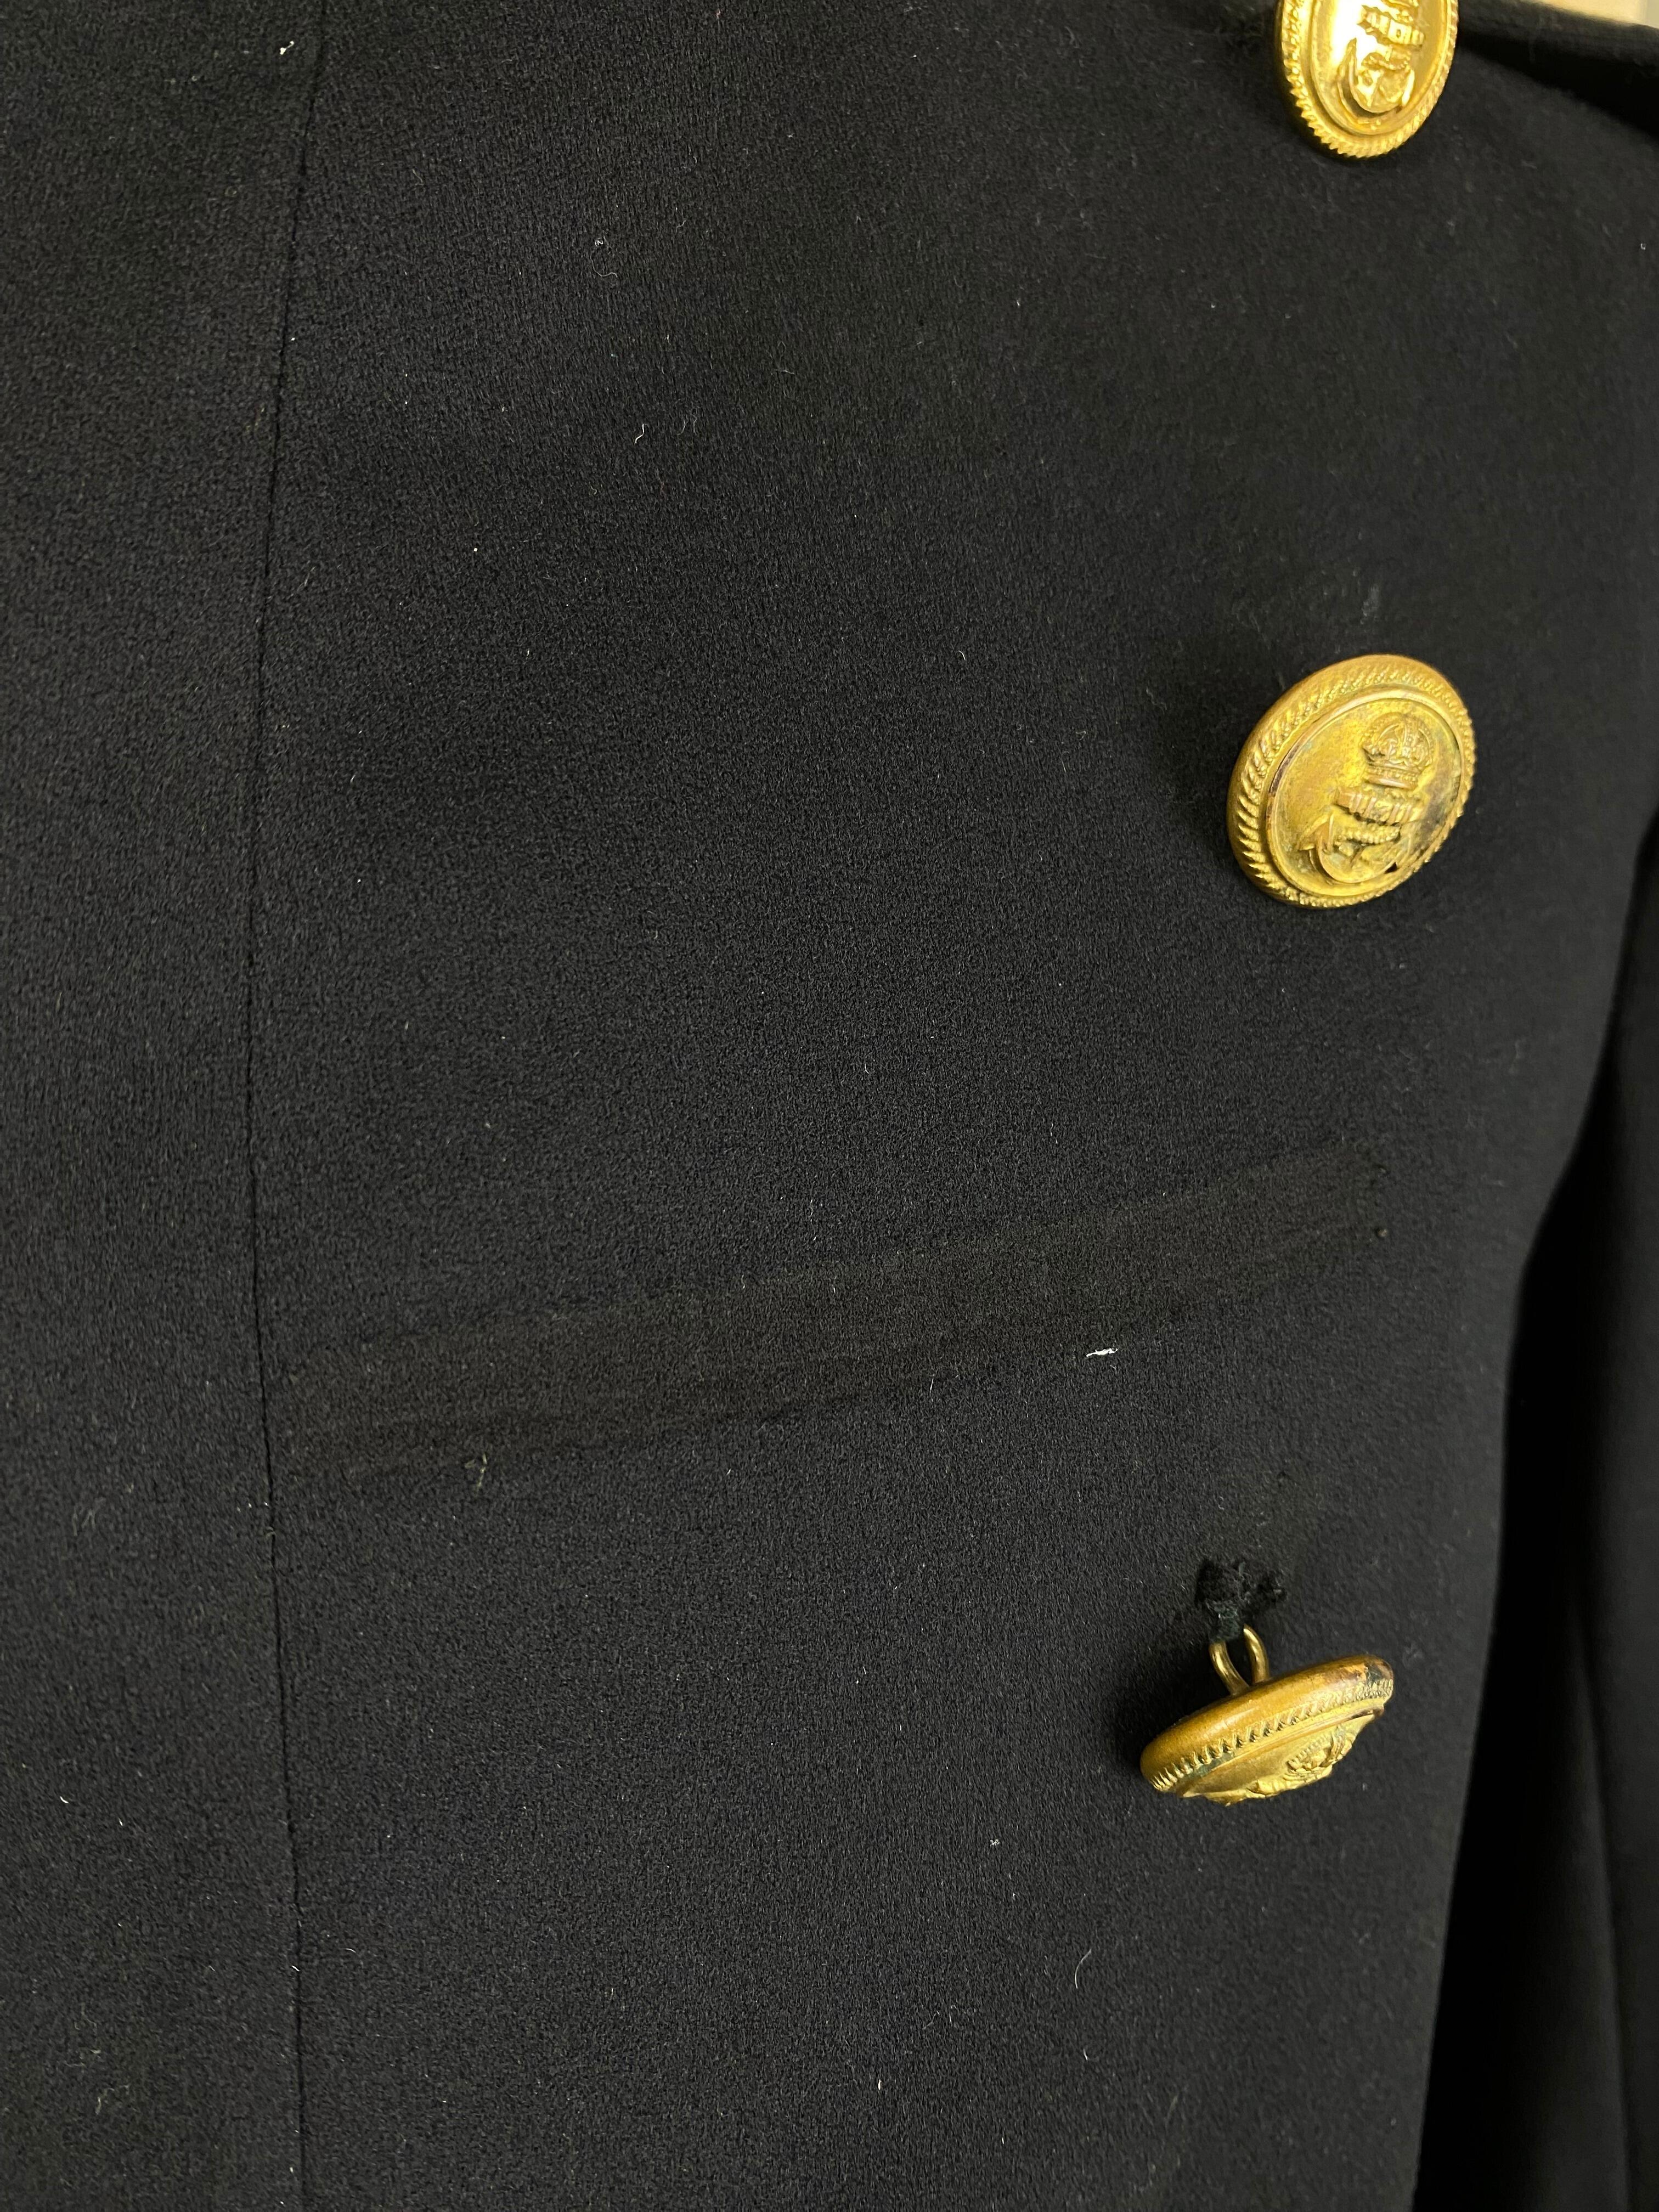 vintage WW1 bespoke naval officers frock coat size 32